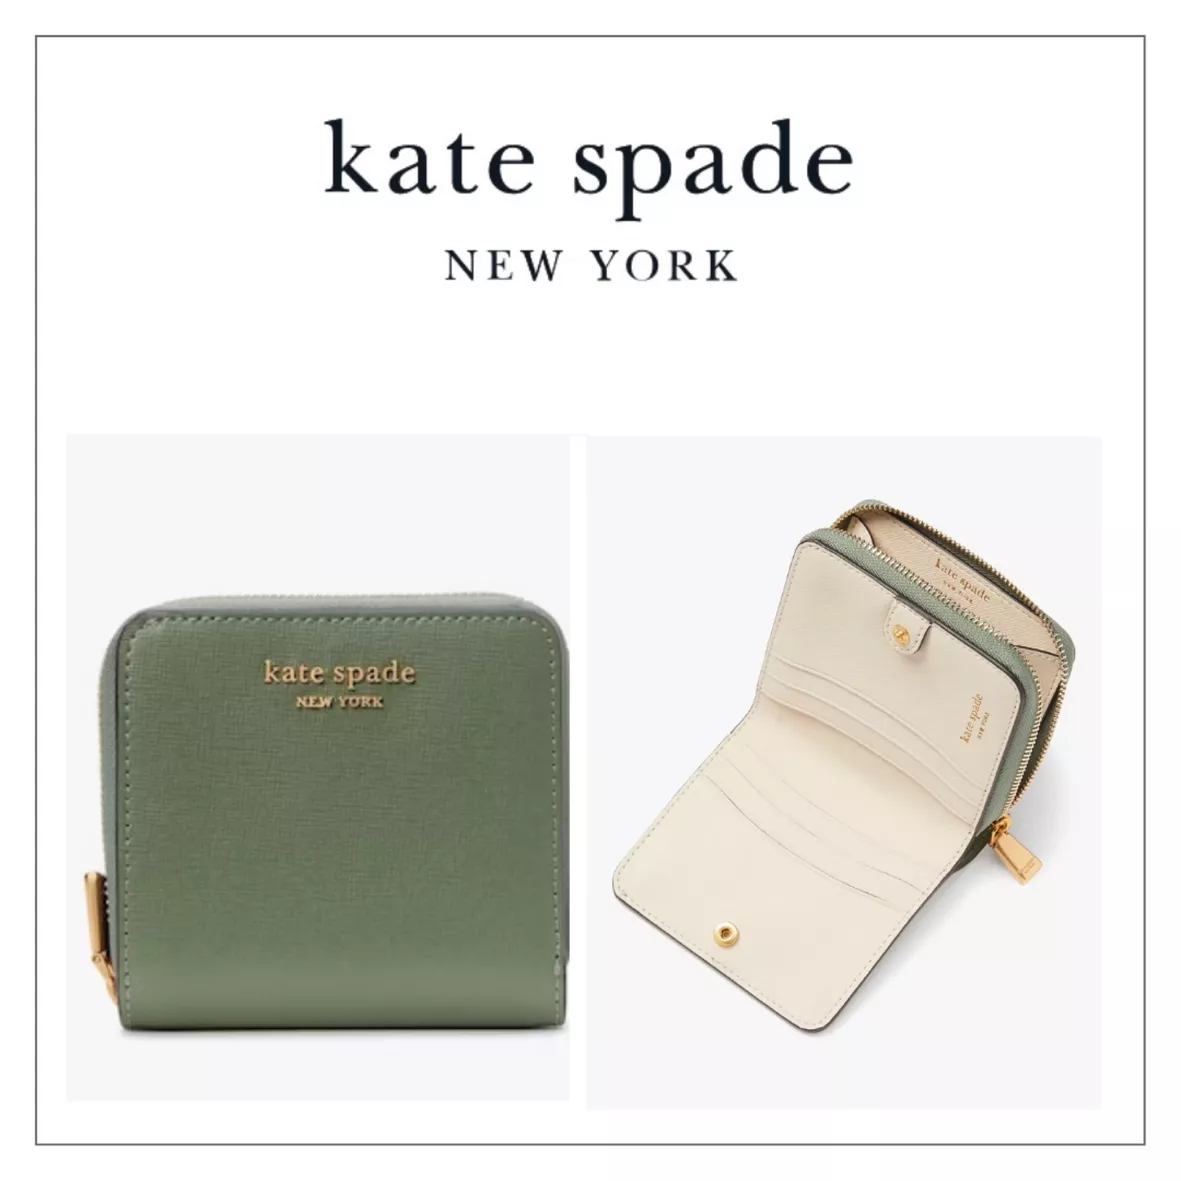 Kate Spade Morgan Travel Wallet - ShopStyle